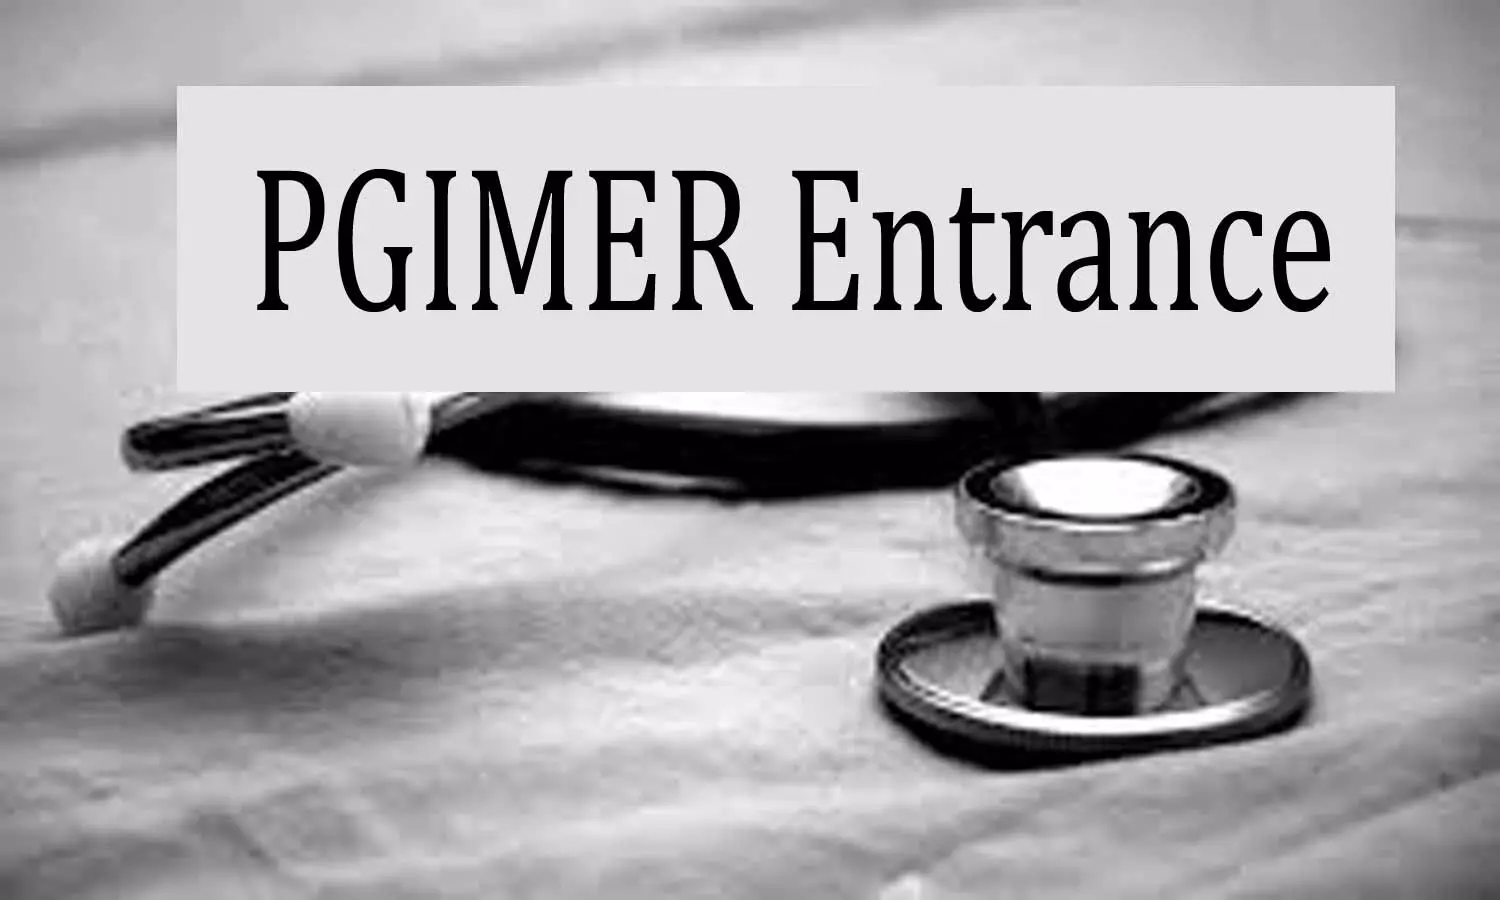 PGIMER reschedules entrance exams for DM, MCh, MPH, Fellowship, Post Doctoral Fellowship, House job, MSc Nursing courses